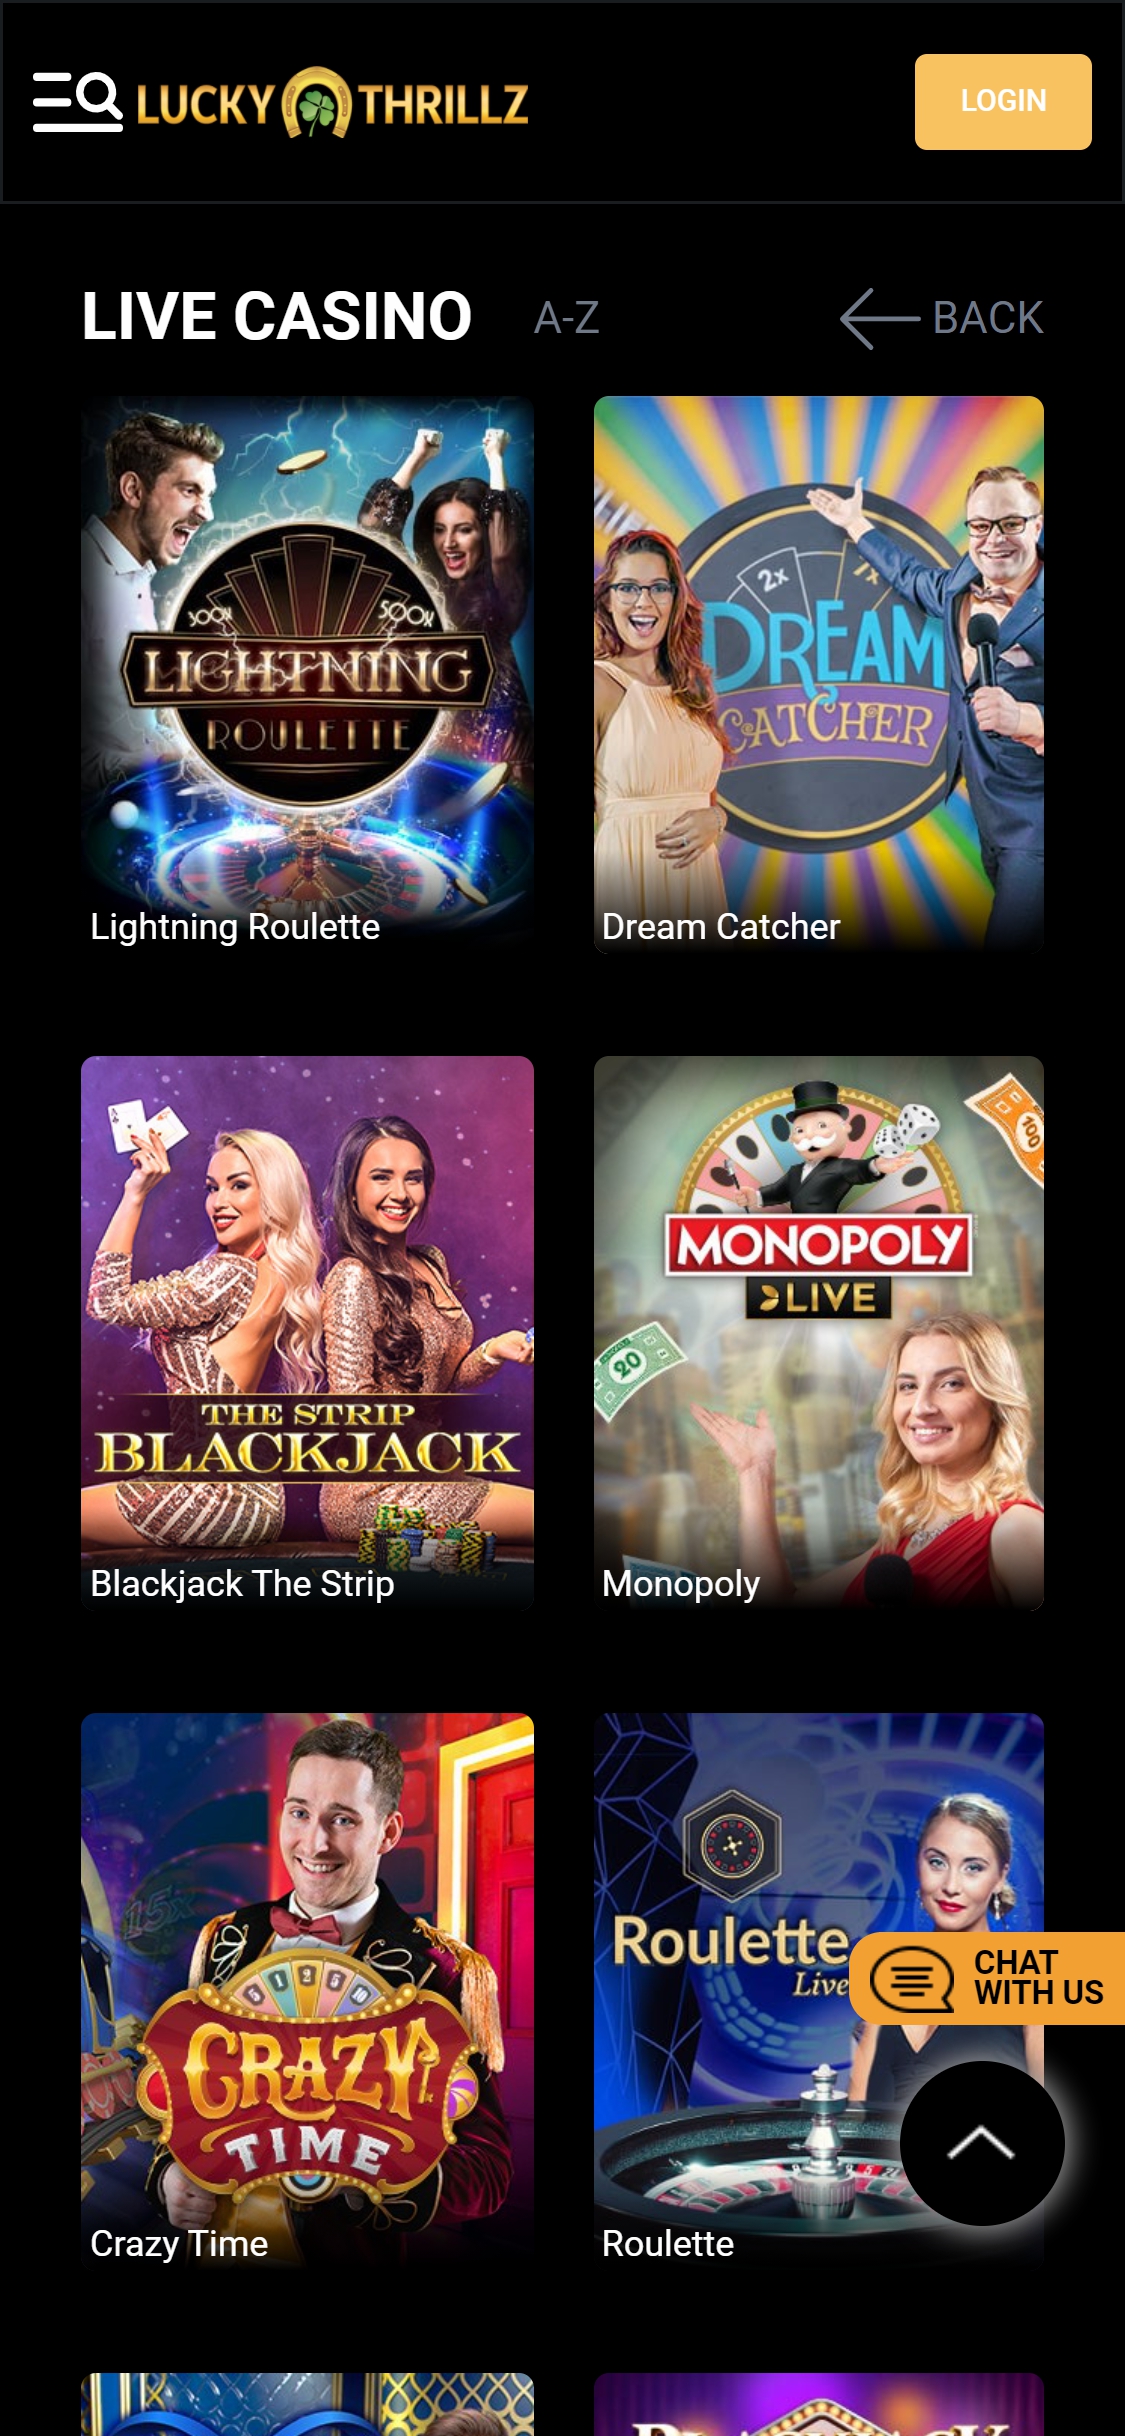 Lucky Thrillz Casino Mobile Live Dealer Games Review